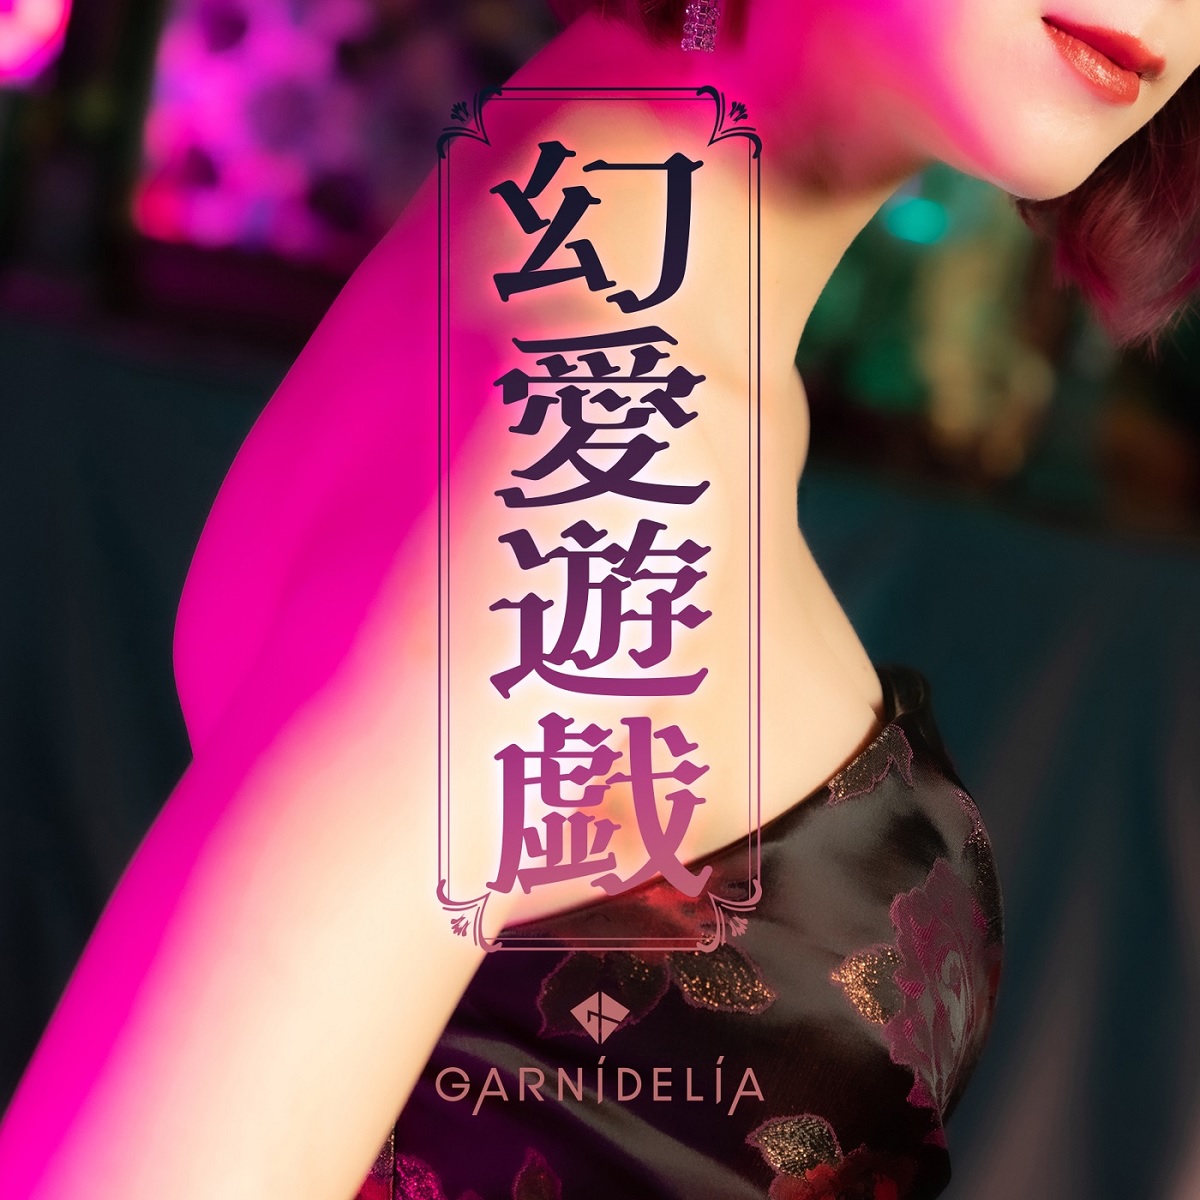 『GARNiDELiA - 幻愛遊戯』収録の『幻愛遊戯』ジャケット